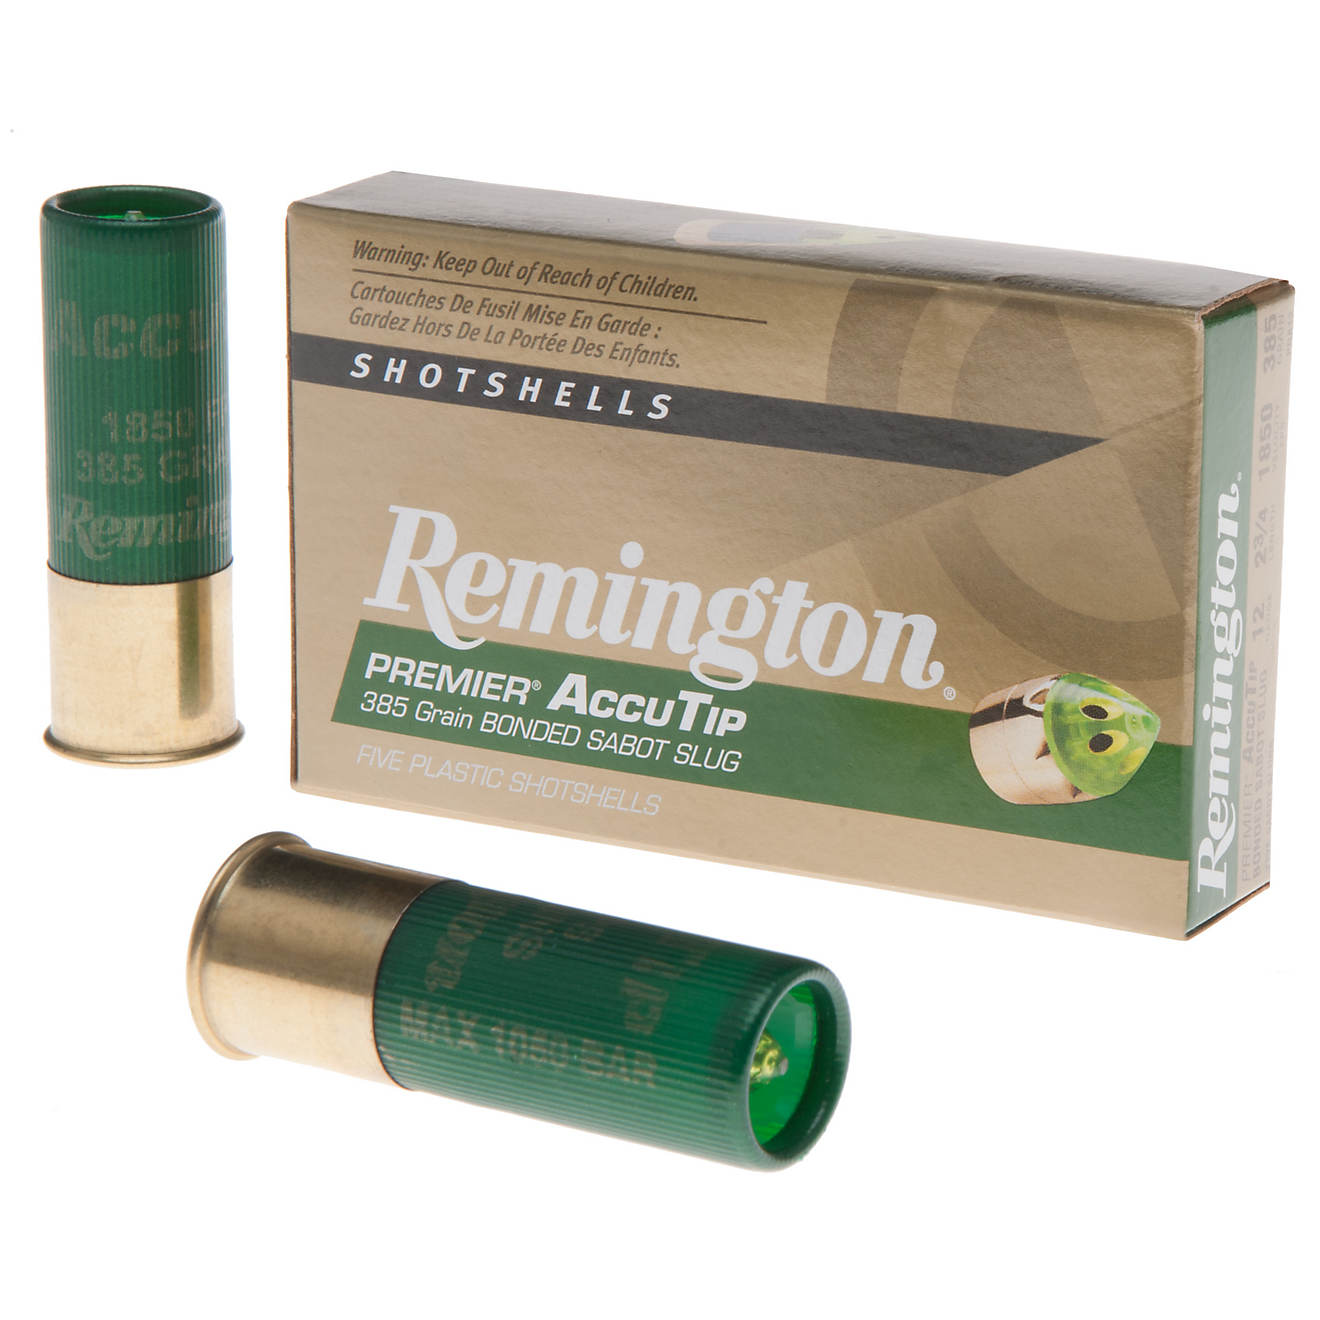 Remington Premier AccuTip 12 Gauge Bonded Sabot Slug Shotshells Academy.